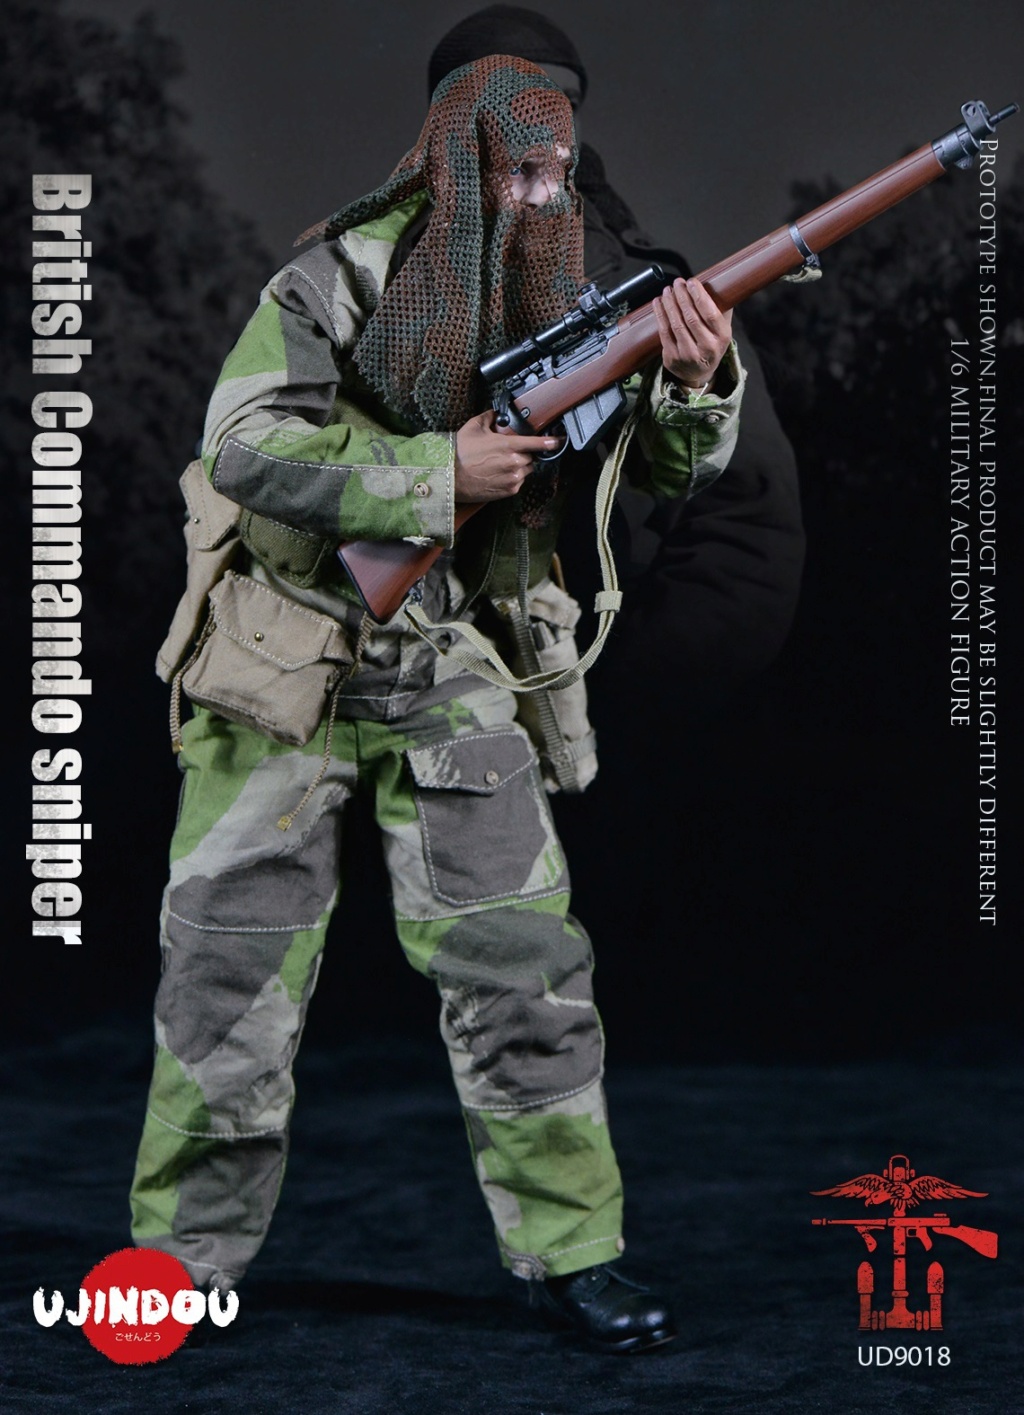 NEW PRODUCT: UJINDOU: UD9018 1/6 Scale WWII British Commando Sniper 1944 13490410